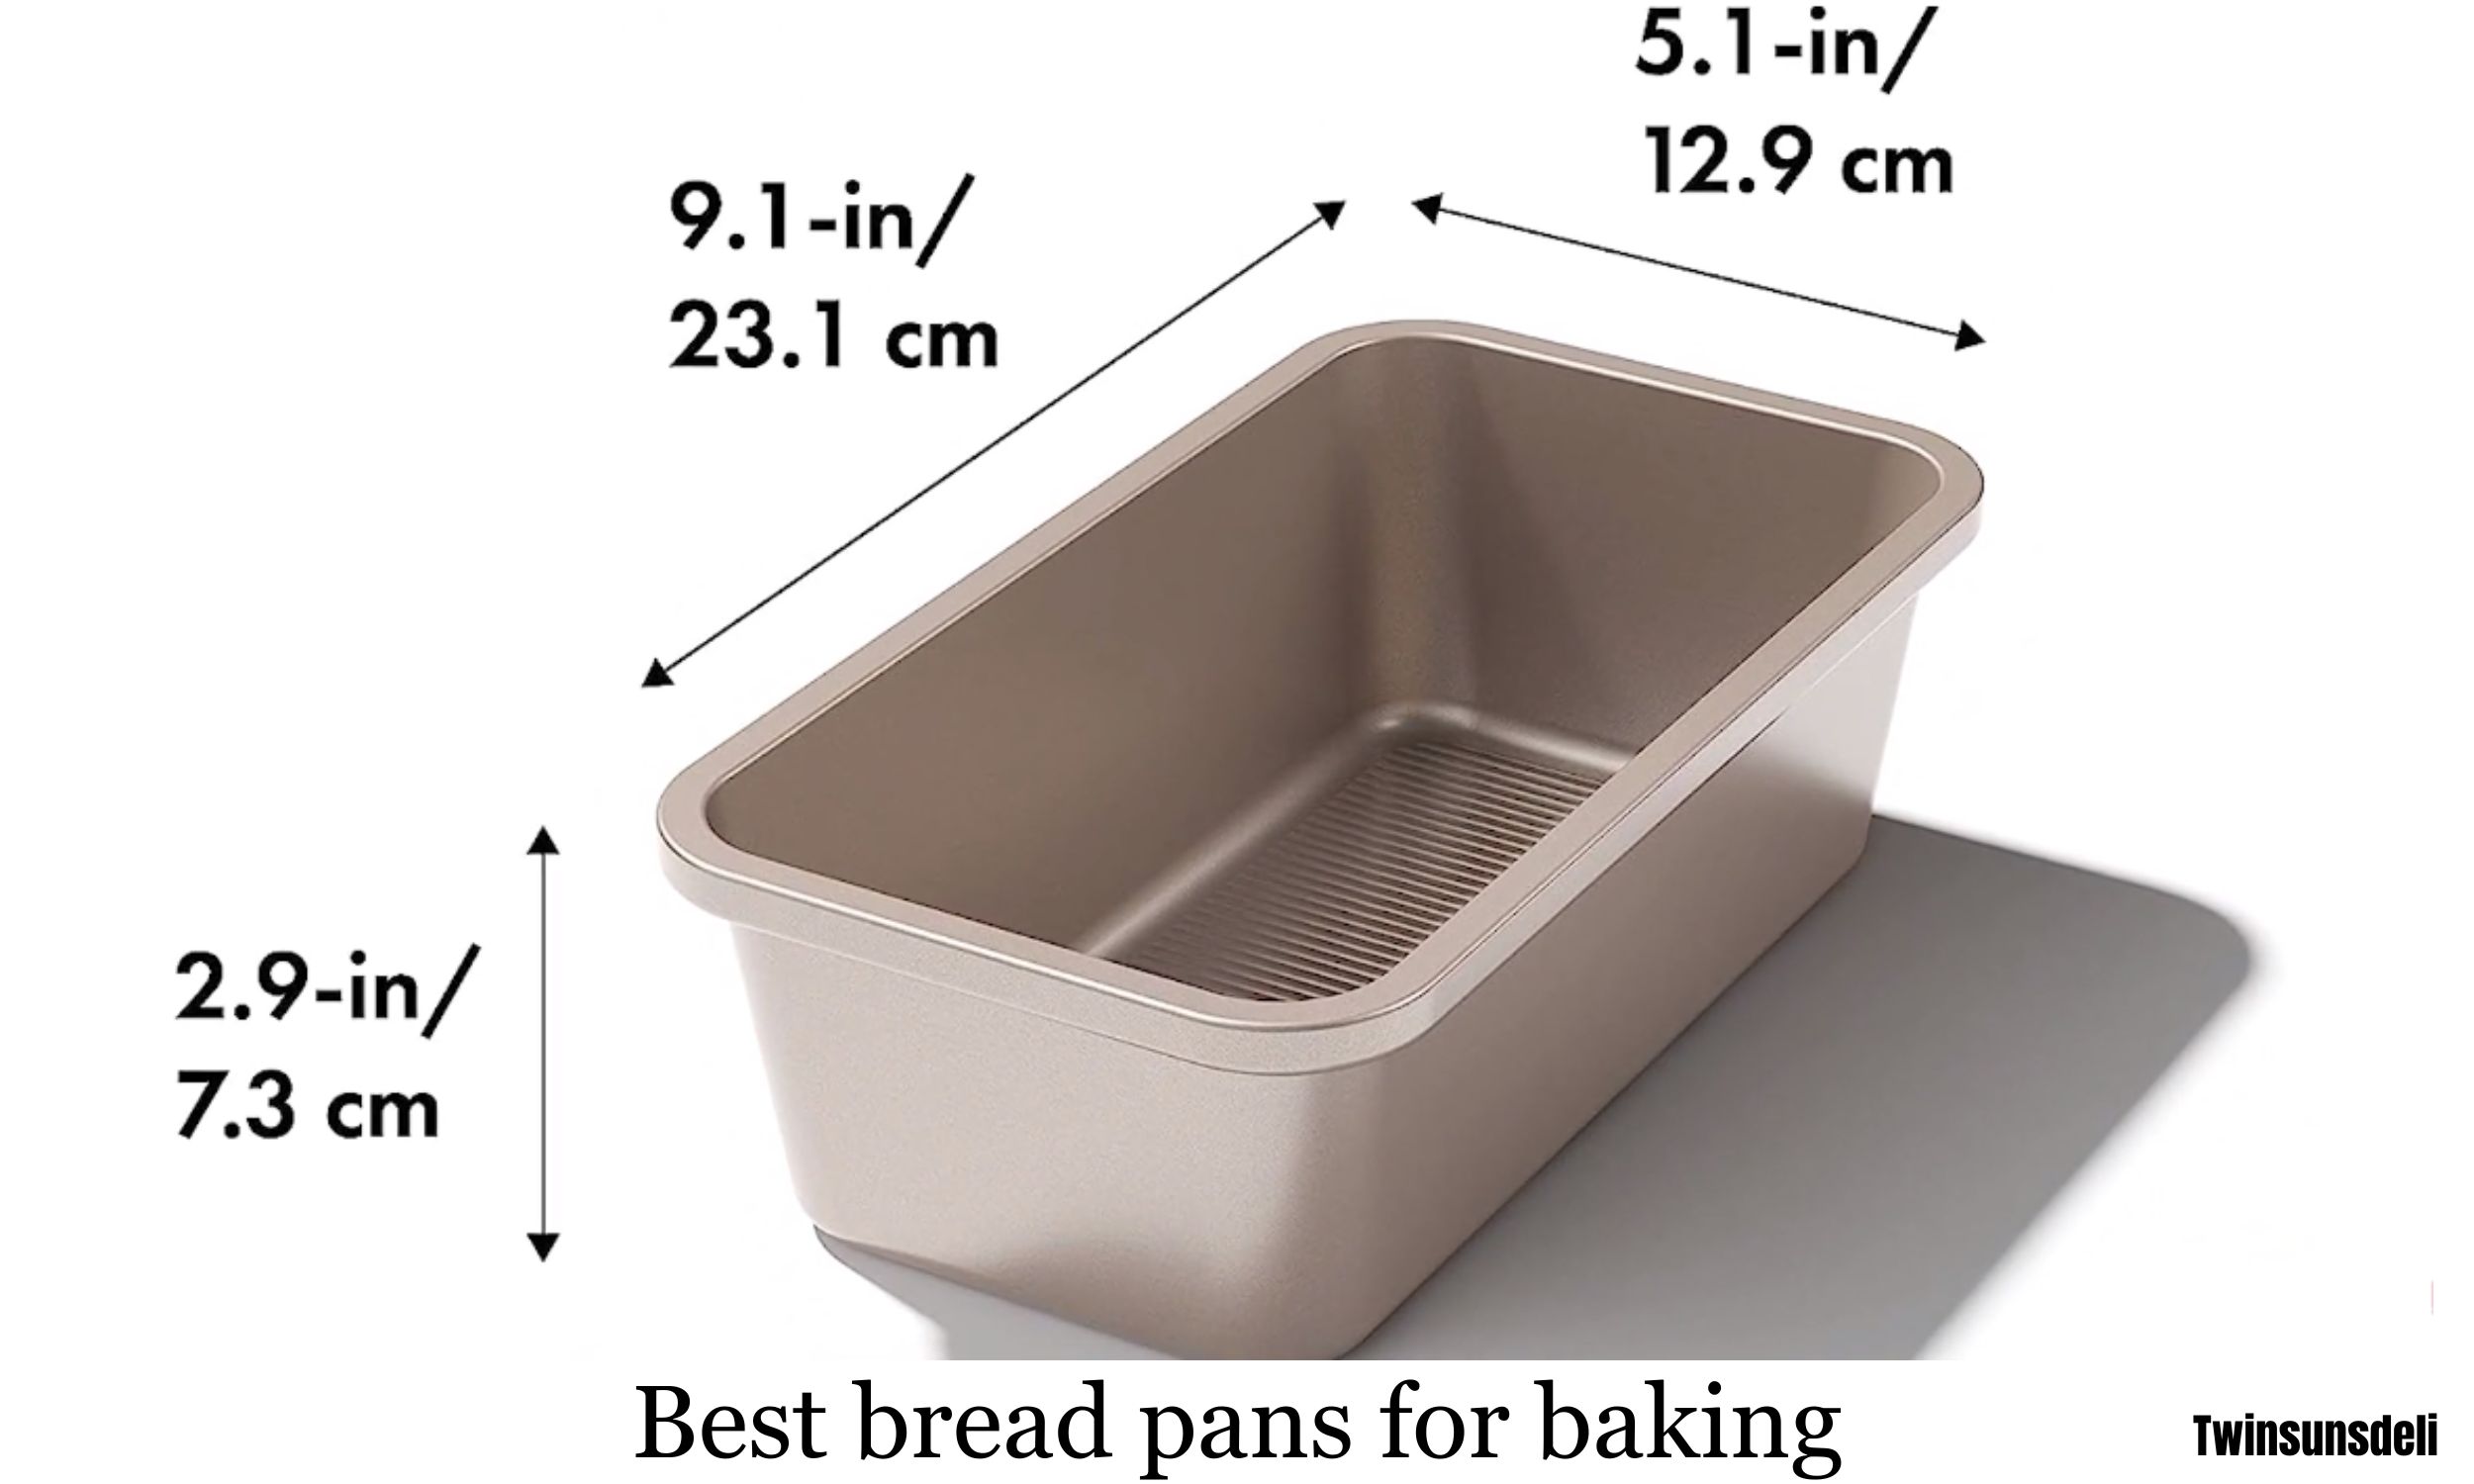 Best bread pans for baking